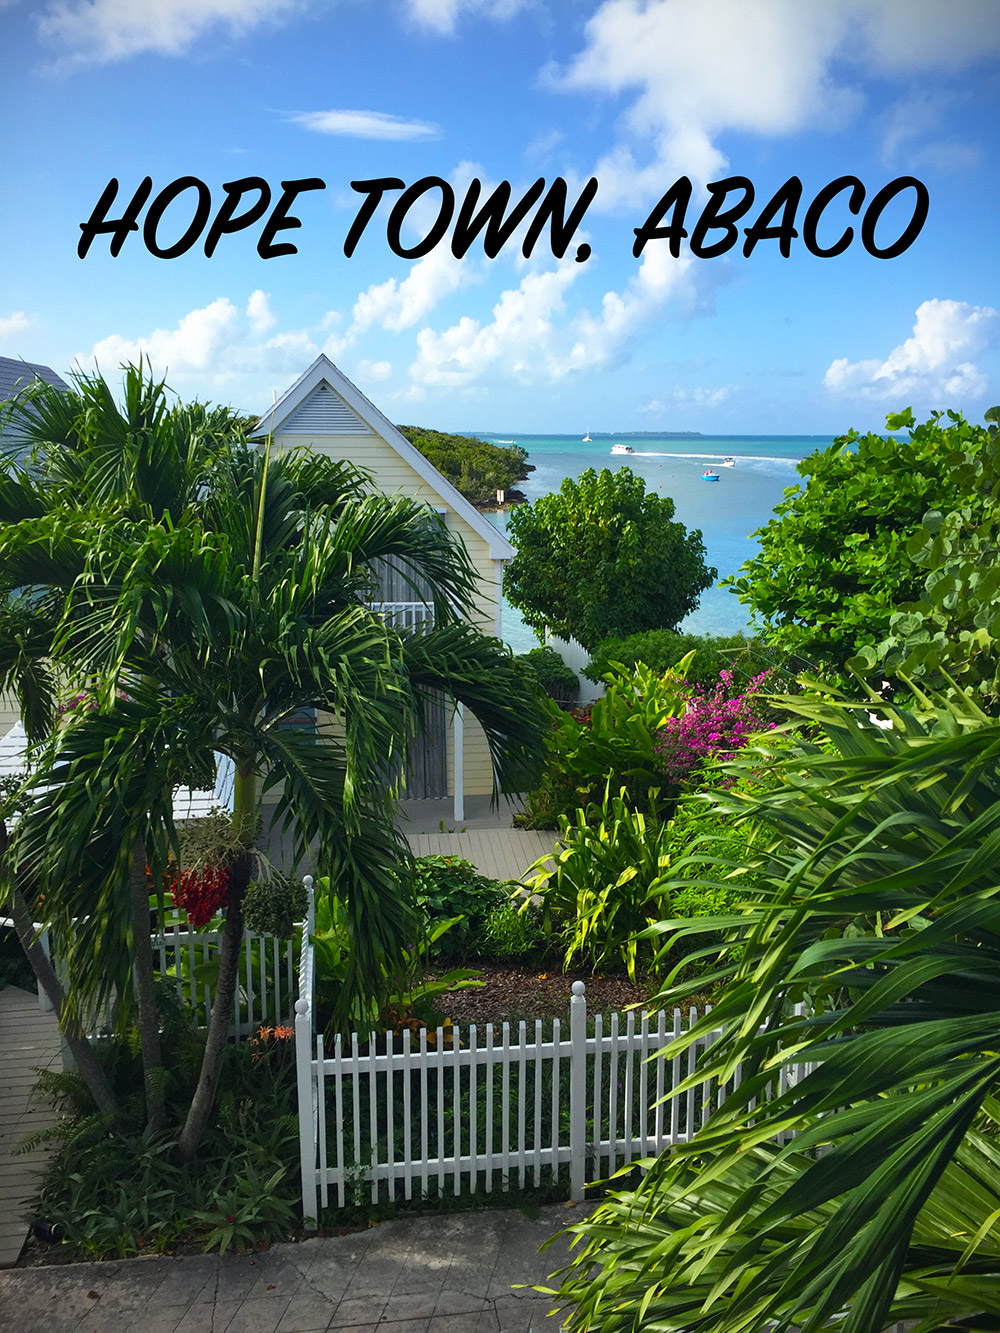 Hopetown Abaco